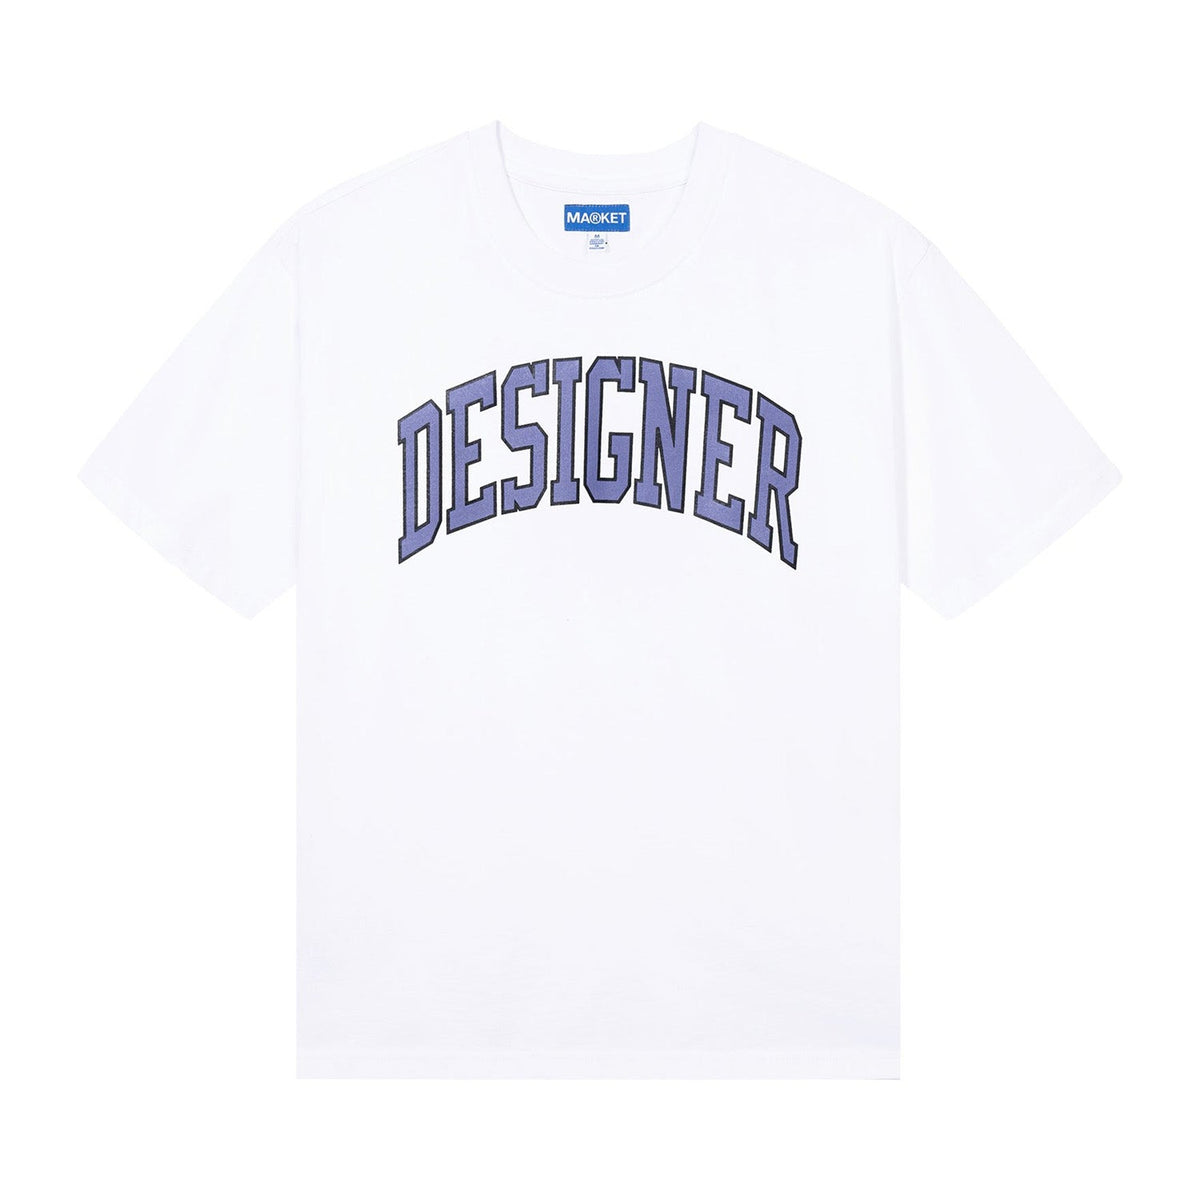 Market Men Designer Arc T-Shirt White - SWEATERS - Canada